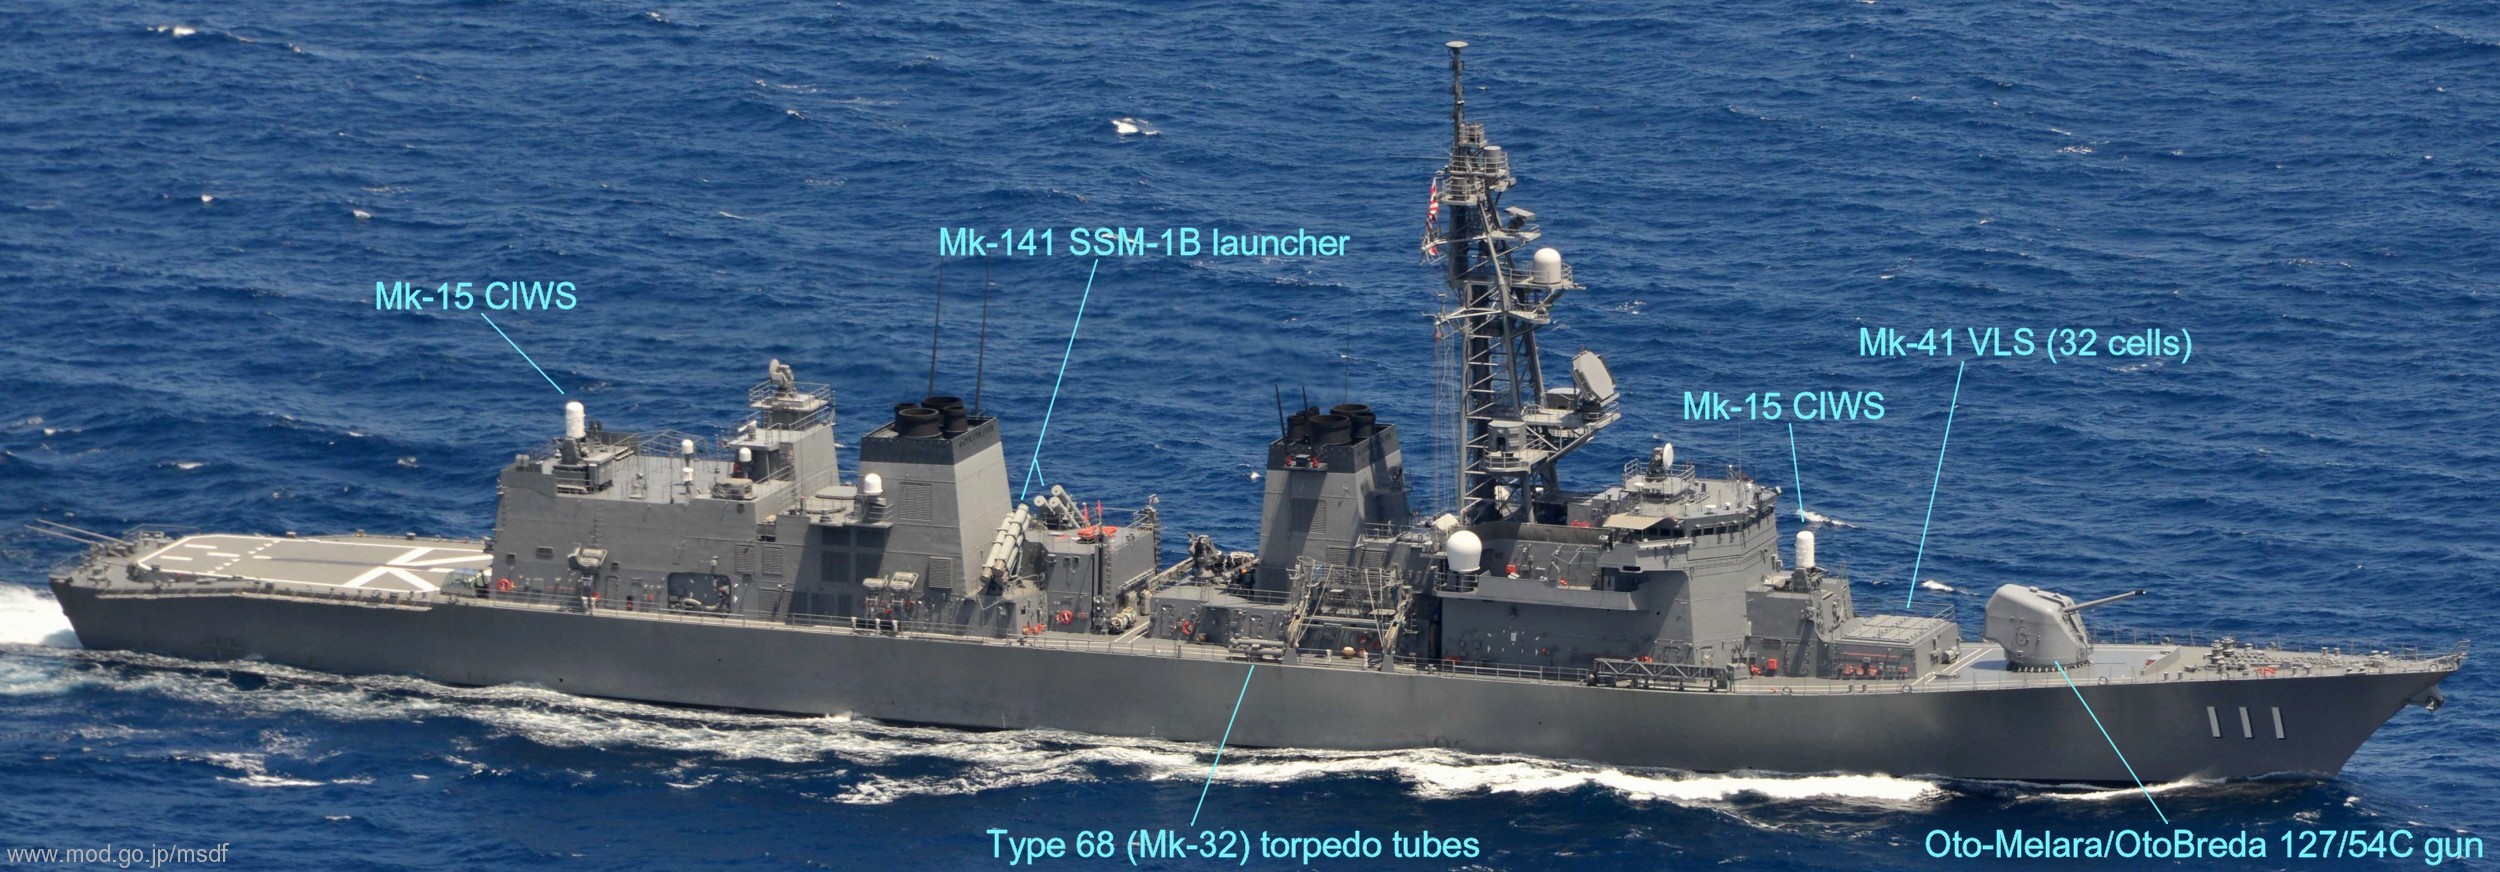 takanami class destroyer armament oto melara breda 127/54c gun mk-41 vertical launching system vls rim-162 essm rum-139 vl-asroc mk-15 ciws type 68 torpedo tubes type-90 ssm-1b jmsdf 002